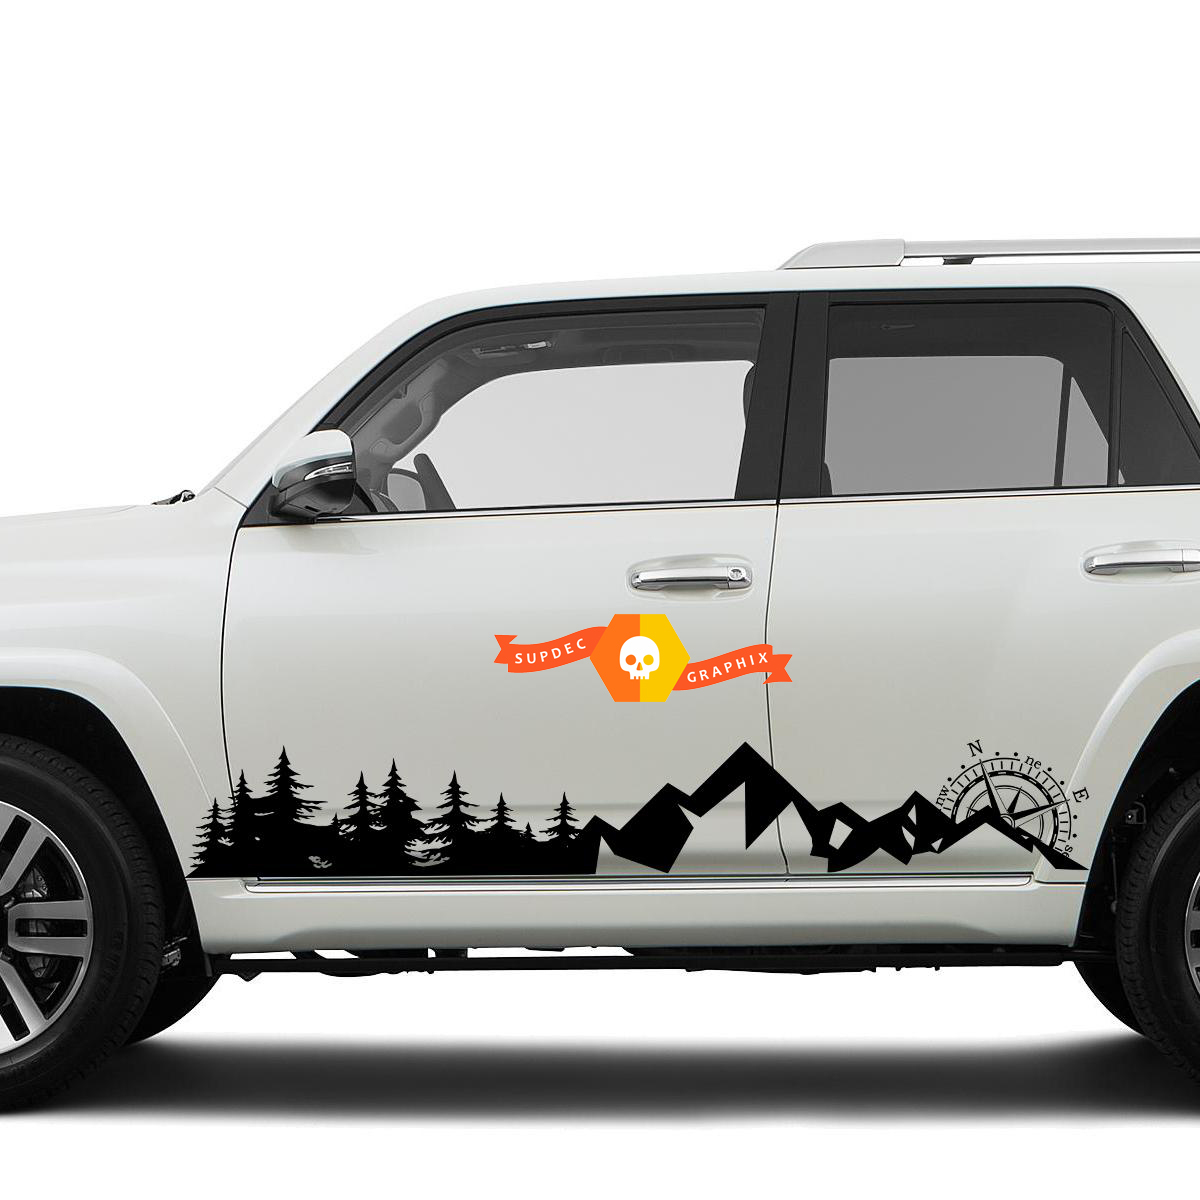 Alberi laterali Mountains e Compass Rocker Side Synes Vinyl Sticker Sticker Decal Fit to Toyota 4Runner 2013 - 2020 TRD quinta generazione